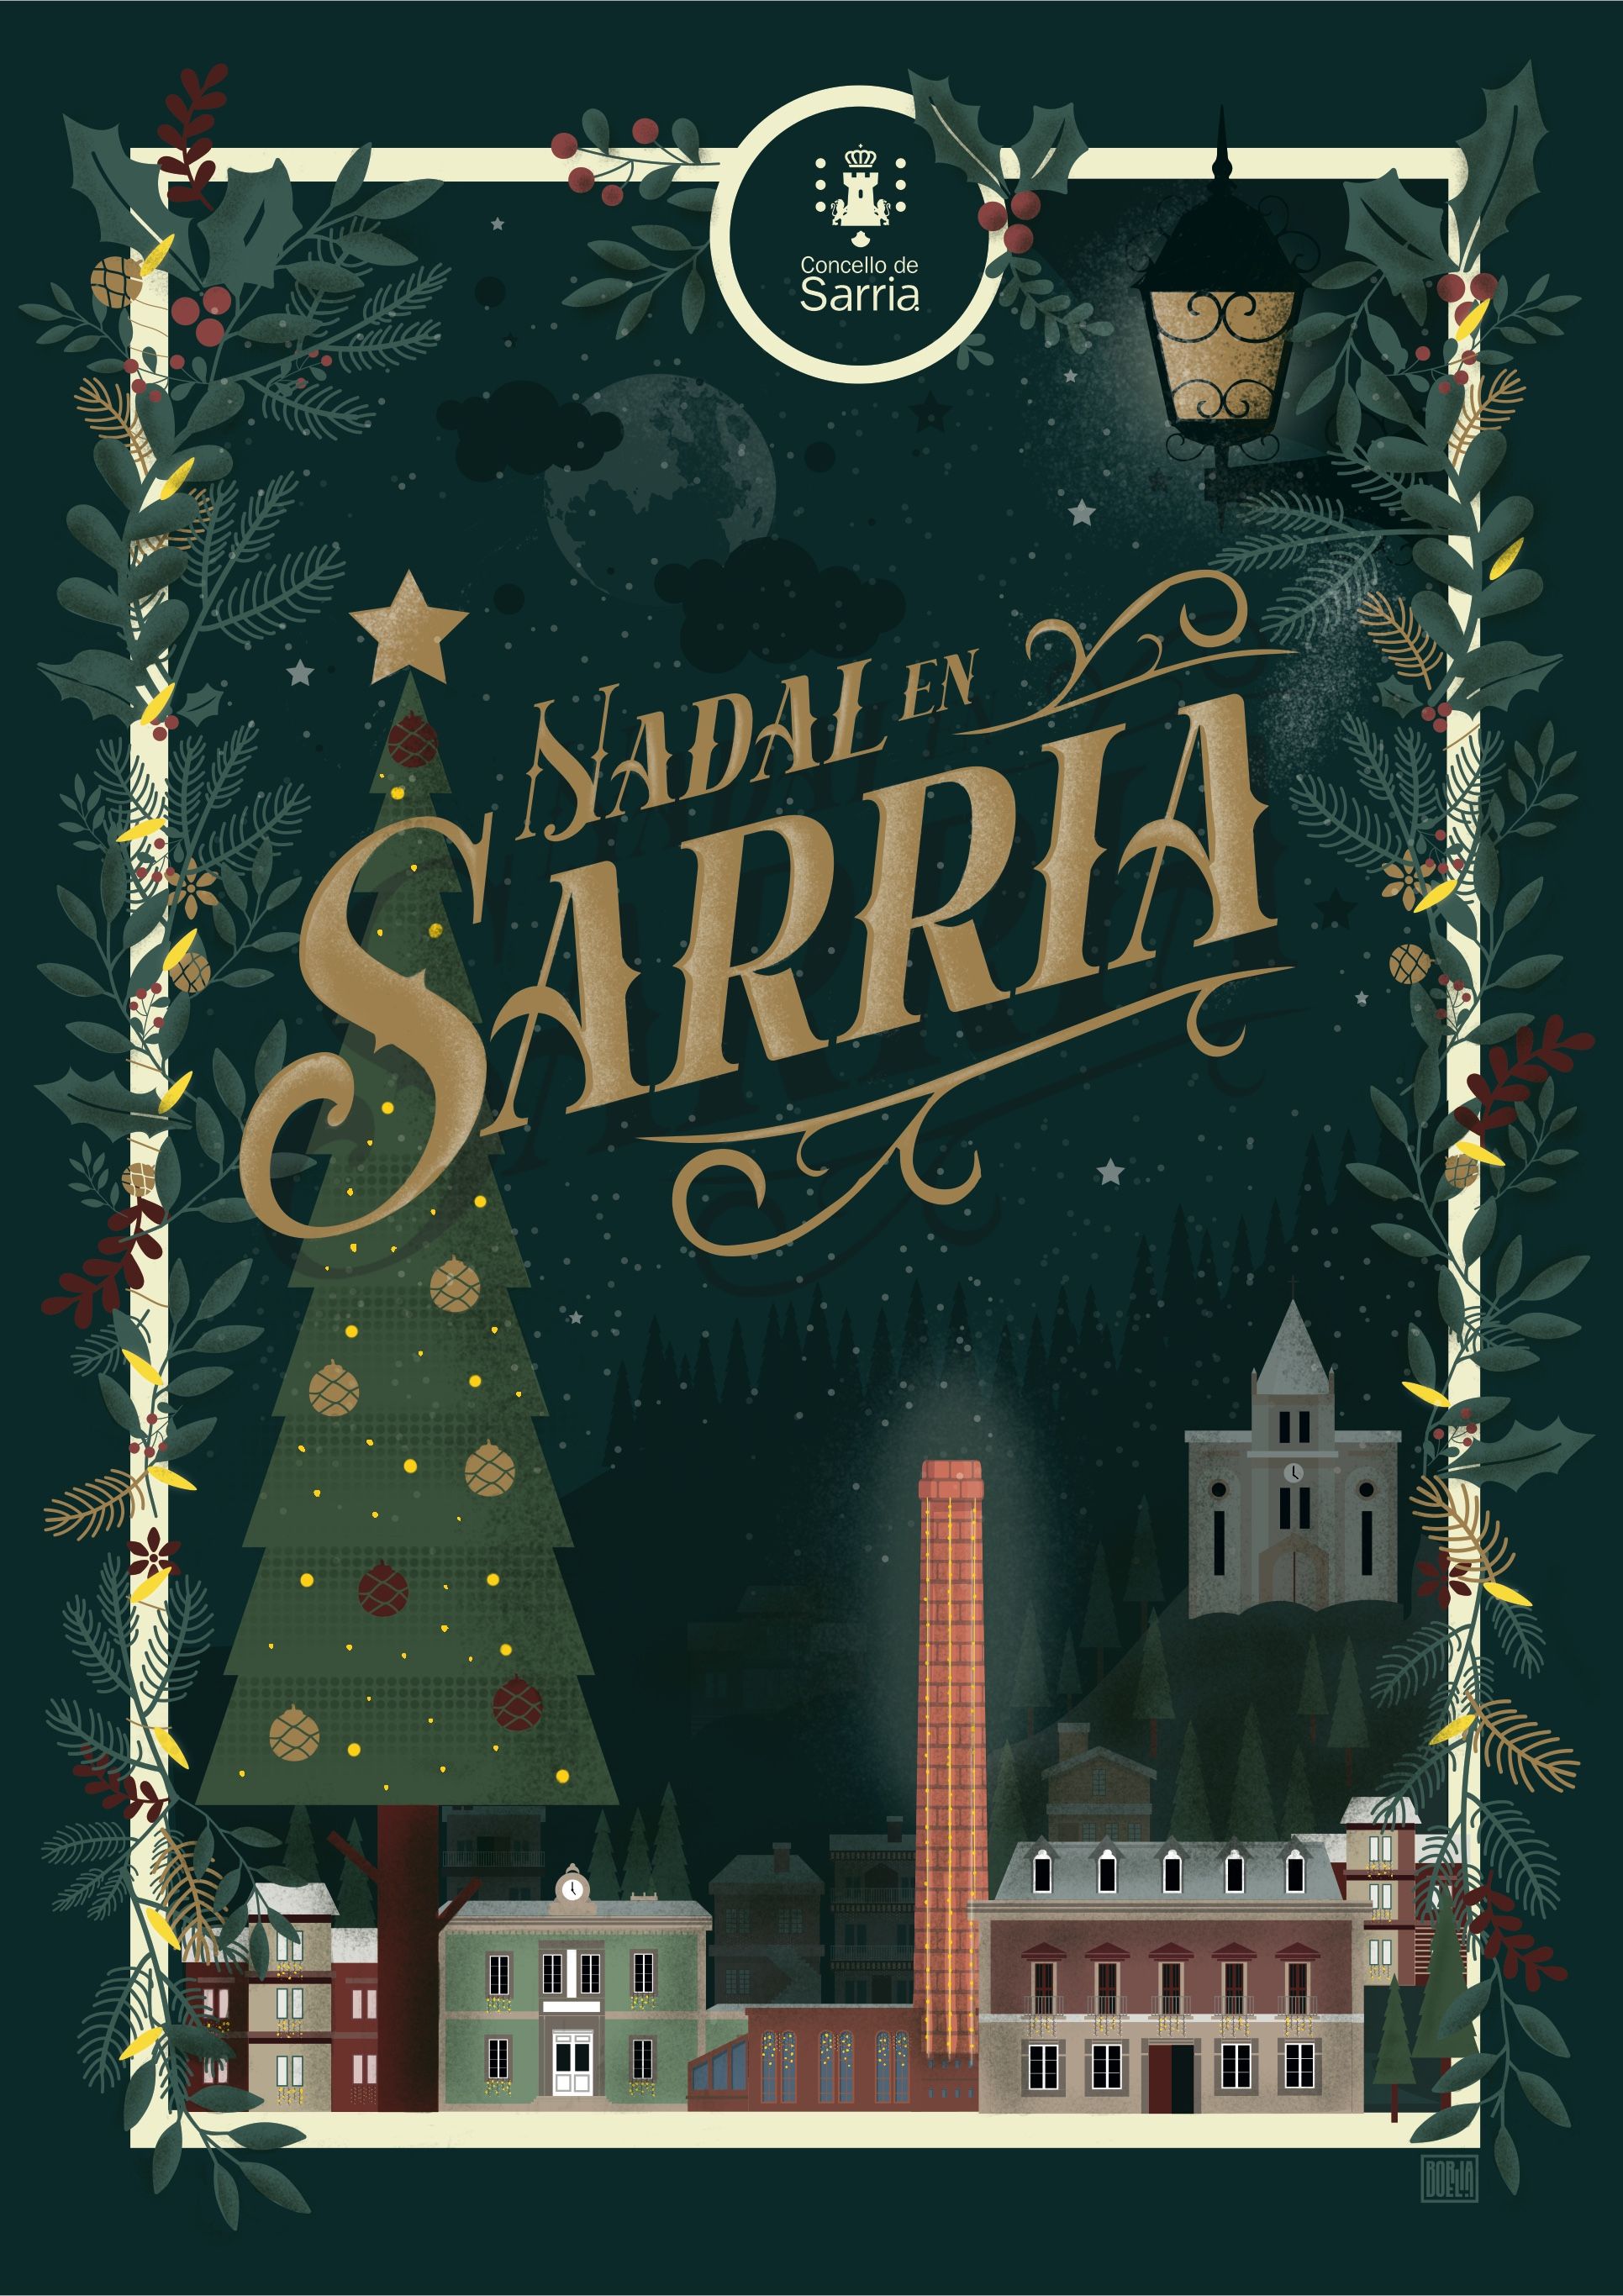 Nadal en Sarria